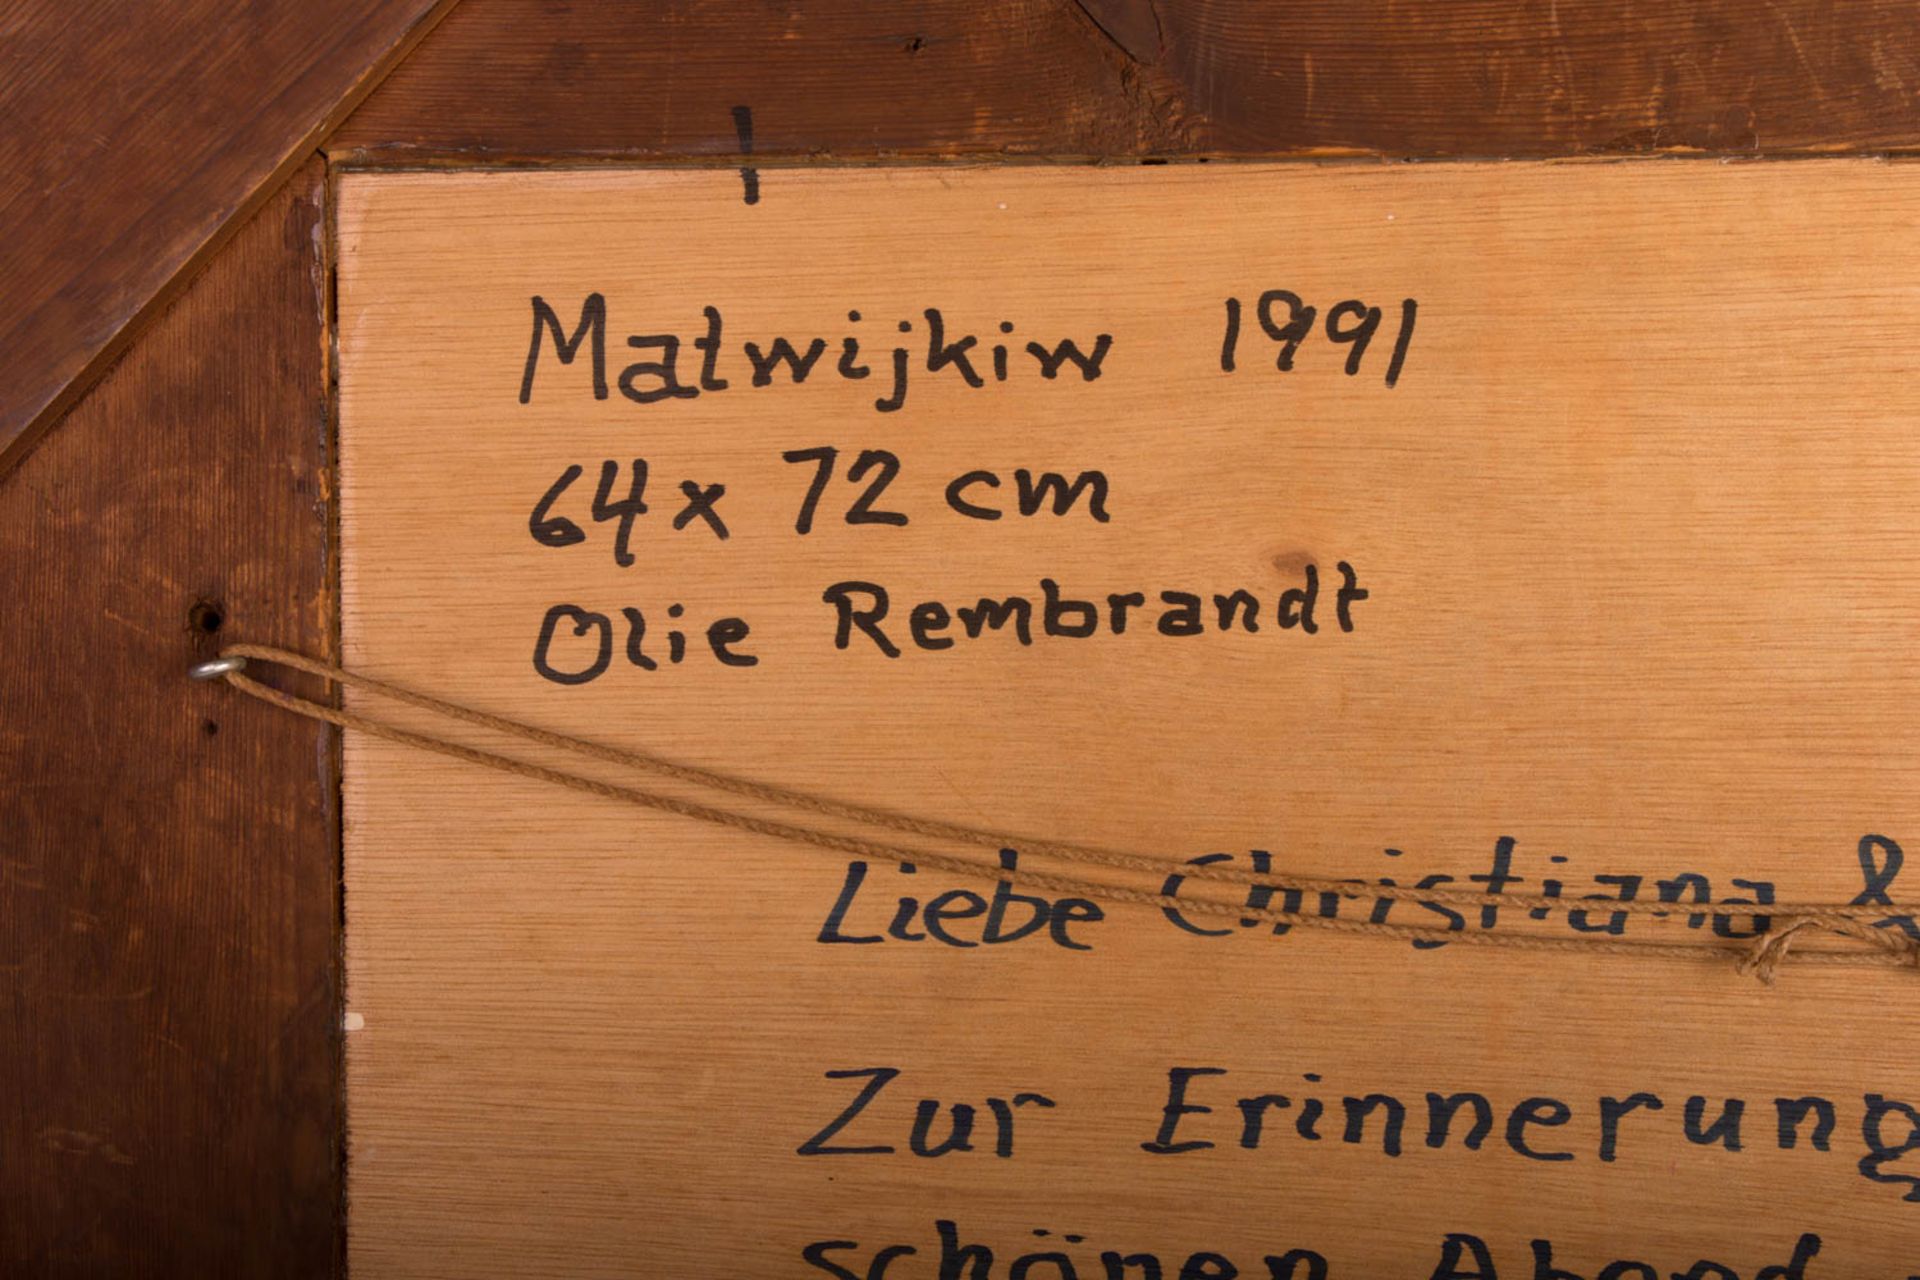 Edward Matwijkiw, Olie Rembrandt, Acryl auf Holz, 1991. - Bild 7 aus 8